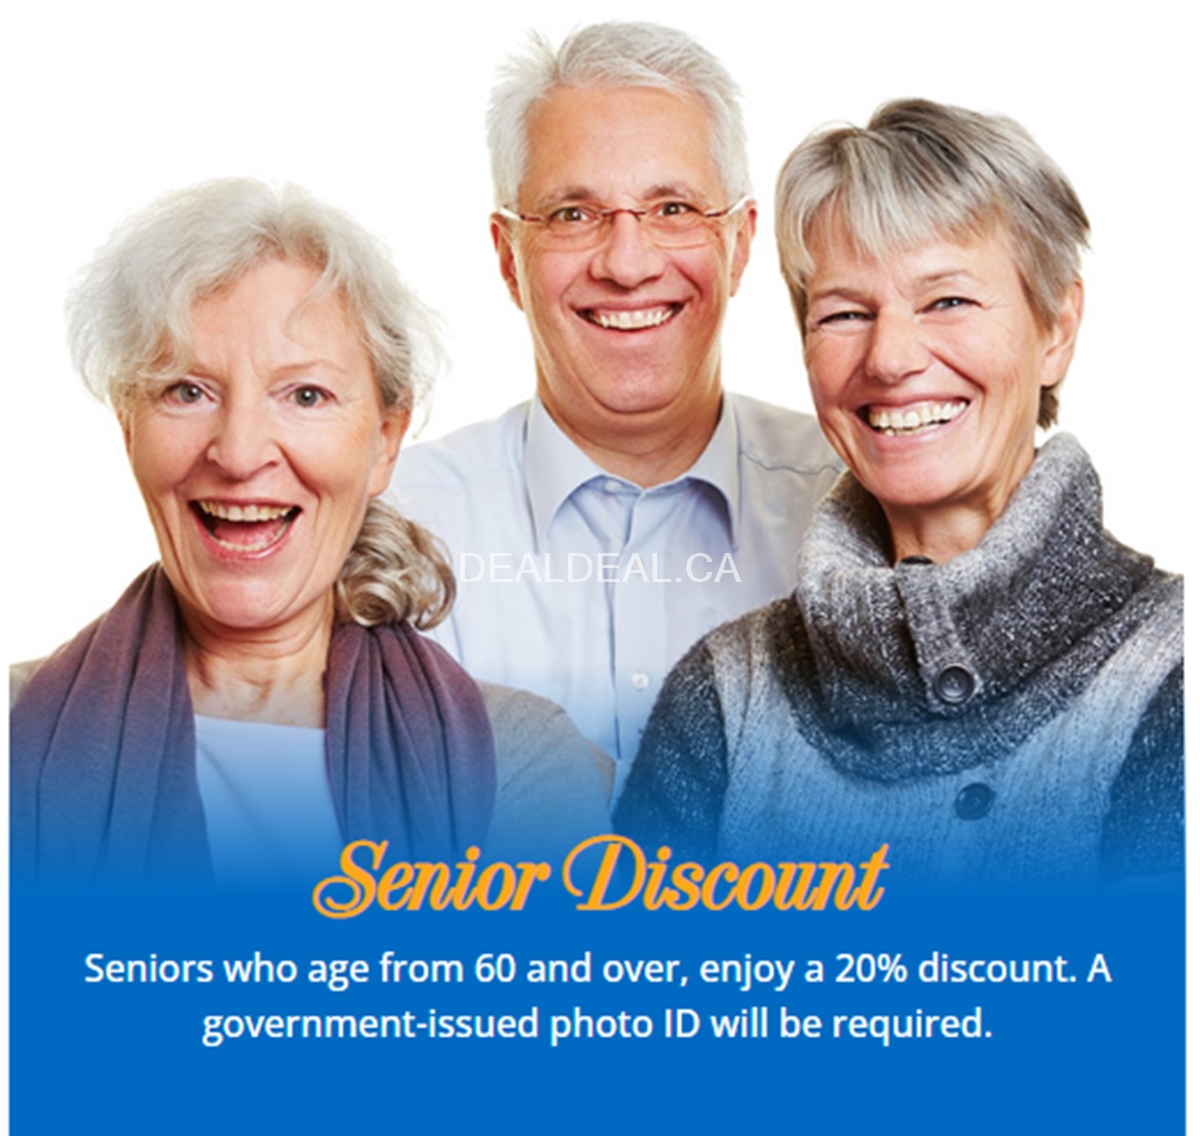 Senior Discount: Enjoy a 20% Discount at Wok of fame